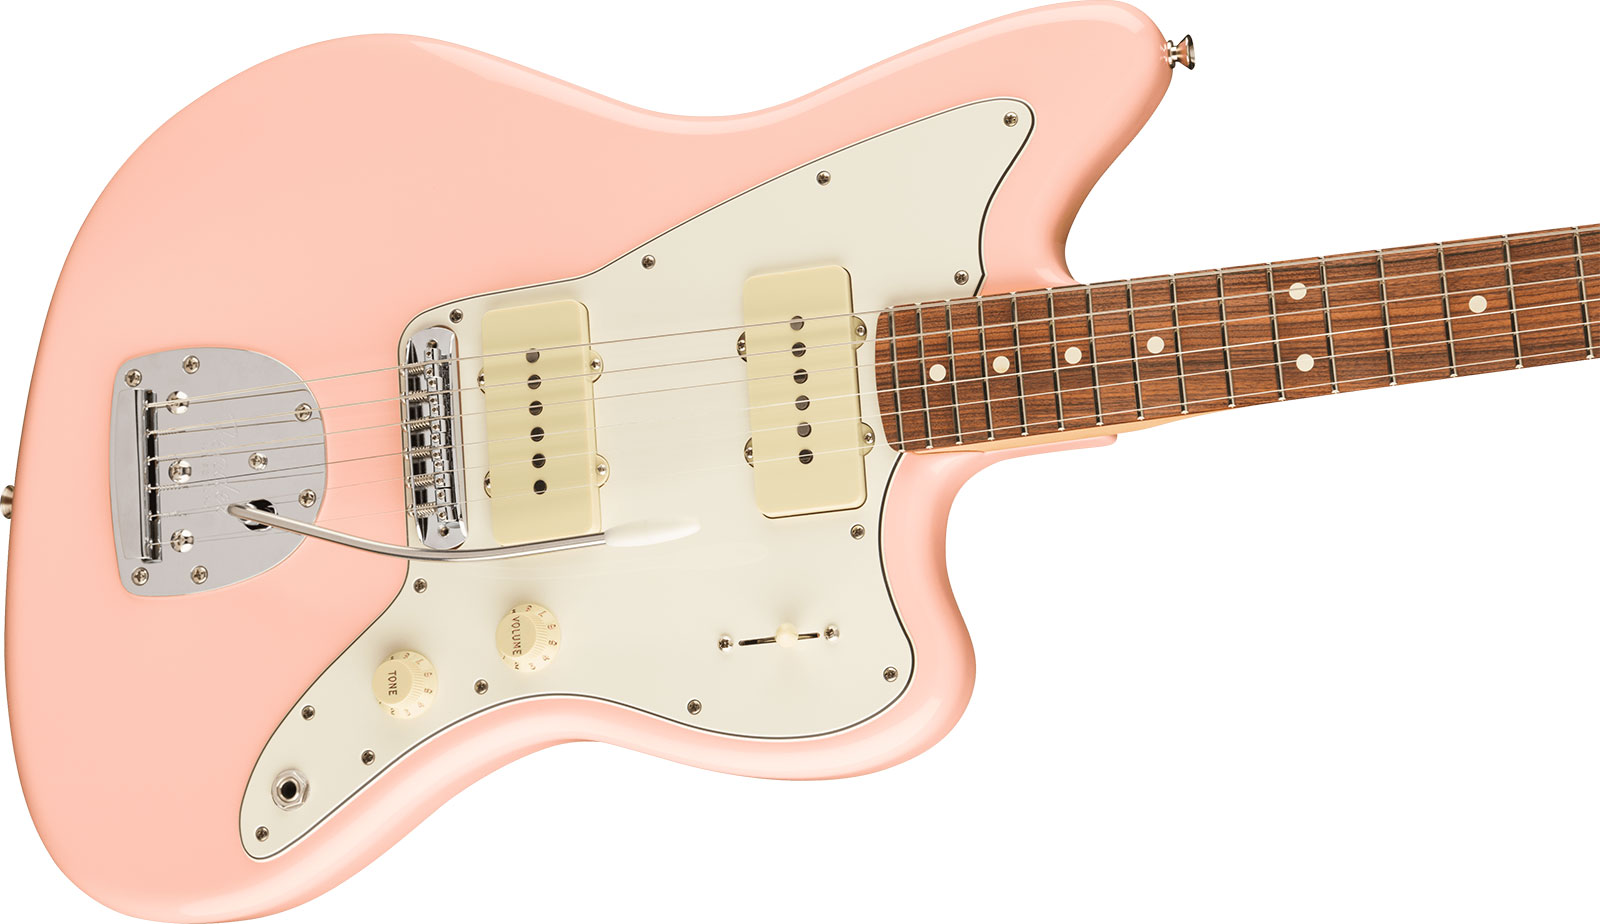 Fender Jazzmaster Player Ltd Mex 2s Trem Pf - Shell Pink - Retro rock electric guitar - Variation 2